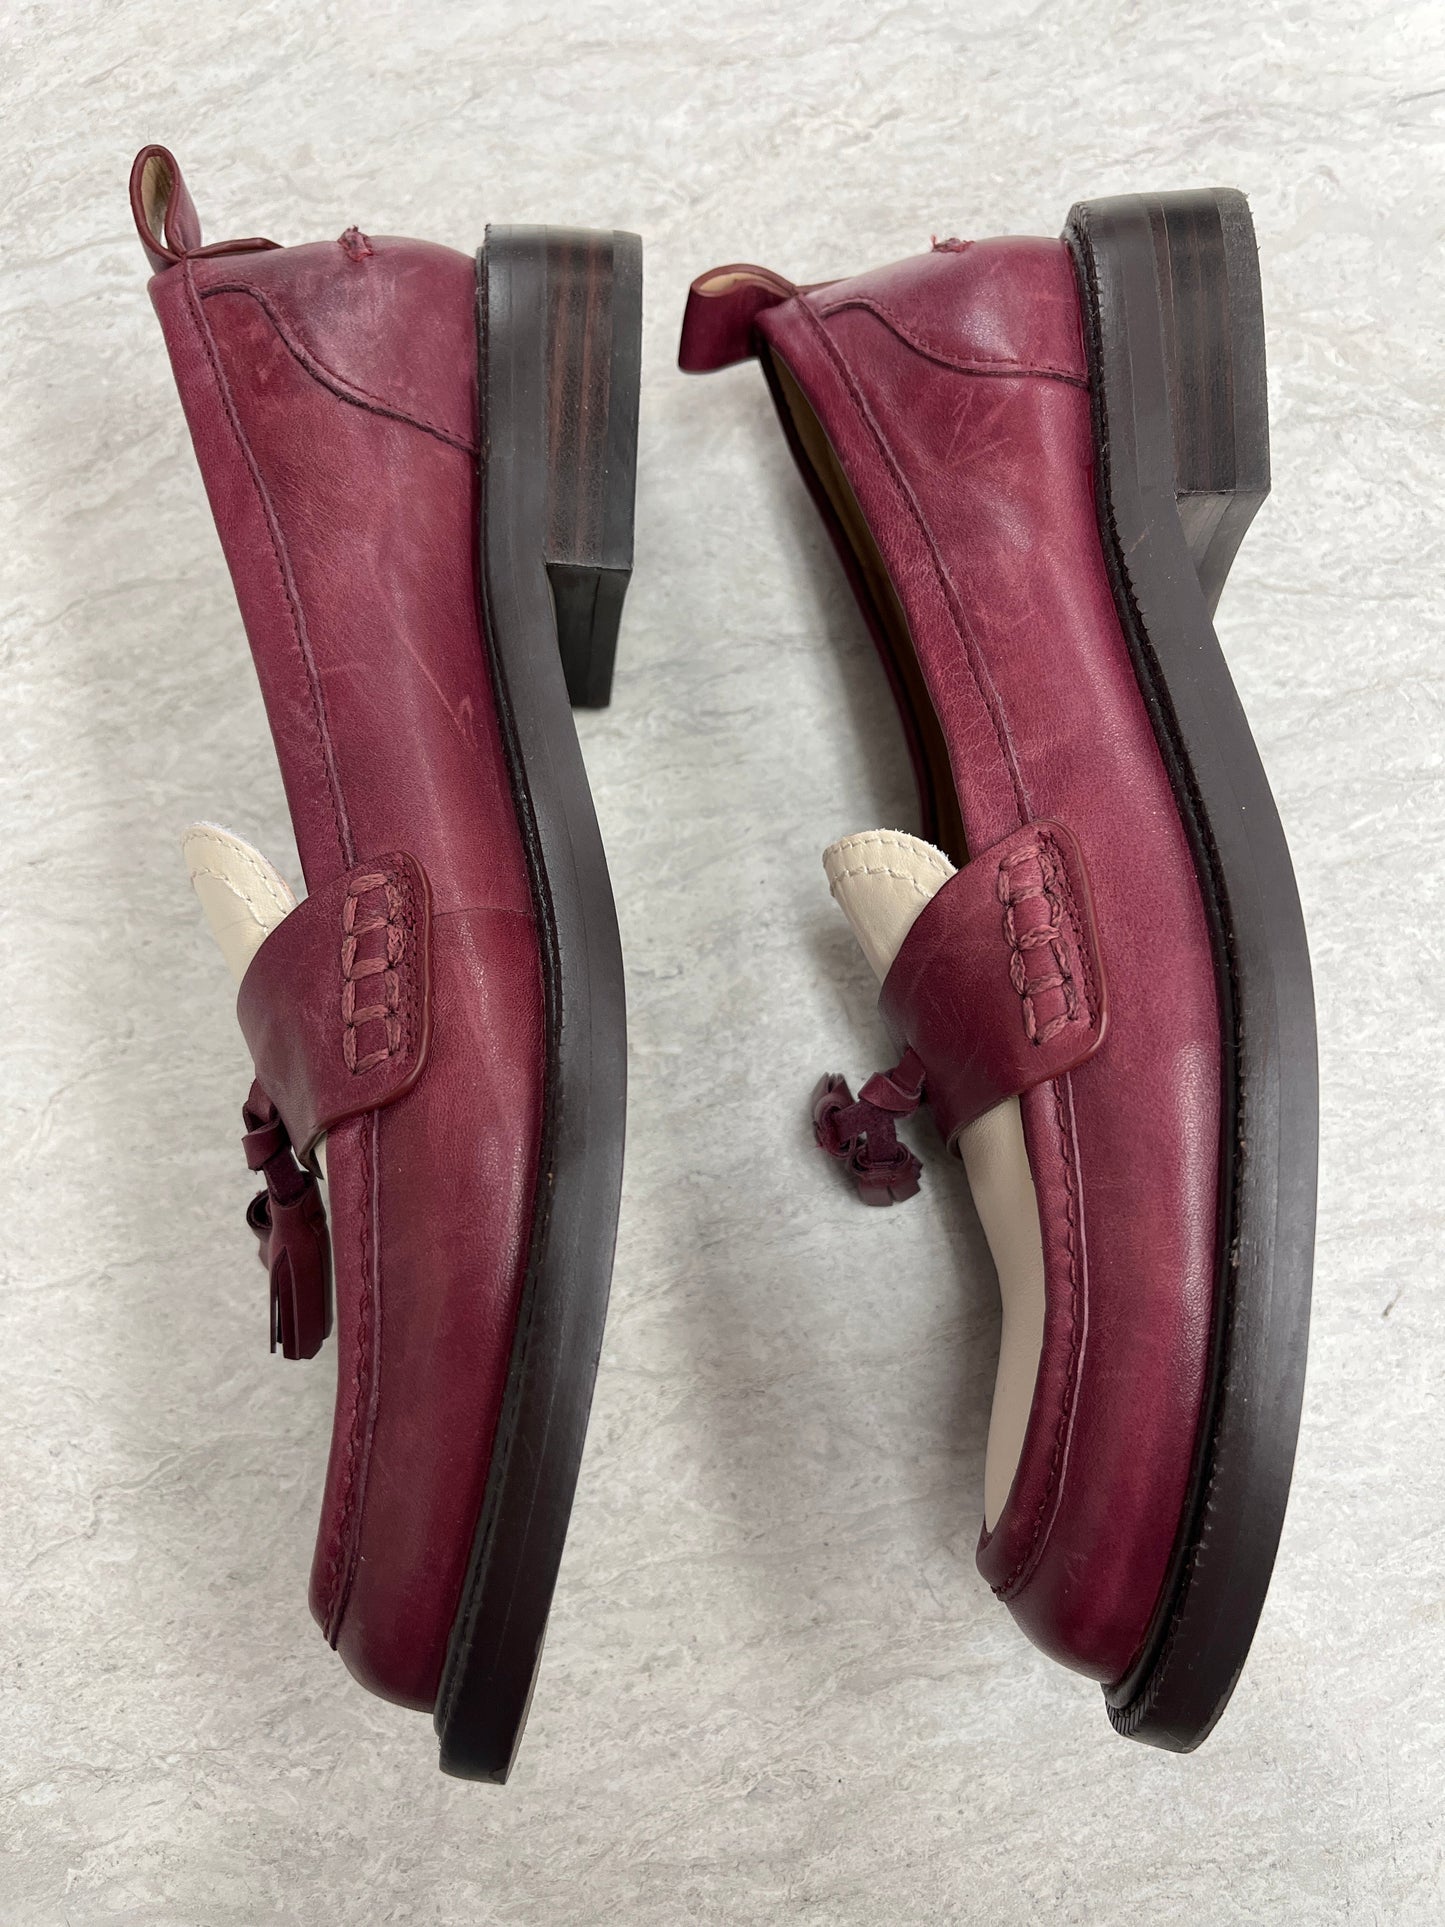 Cream & Red Shoes Flats Sam Edelman, Size 6.5